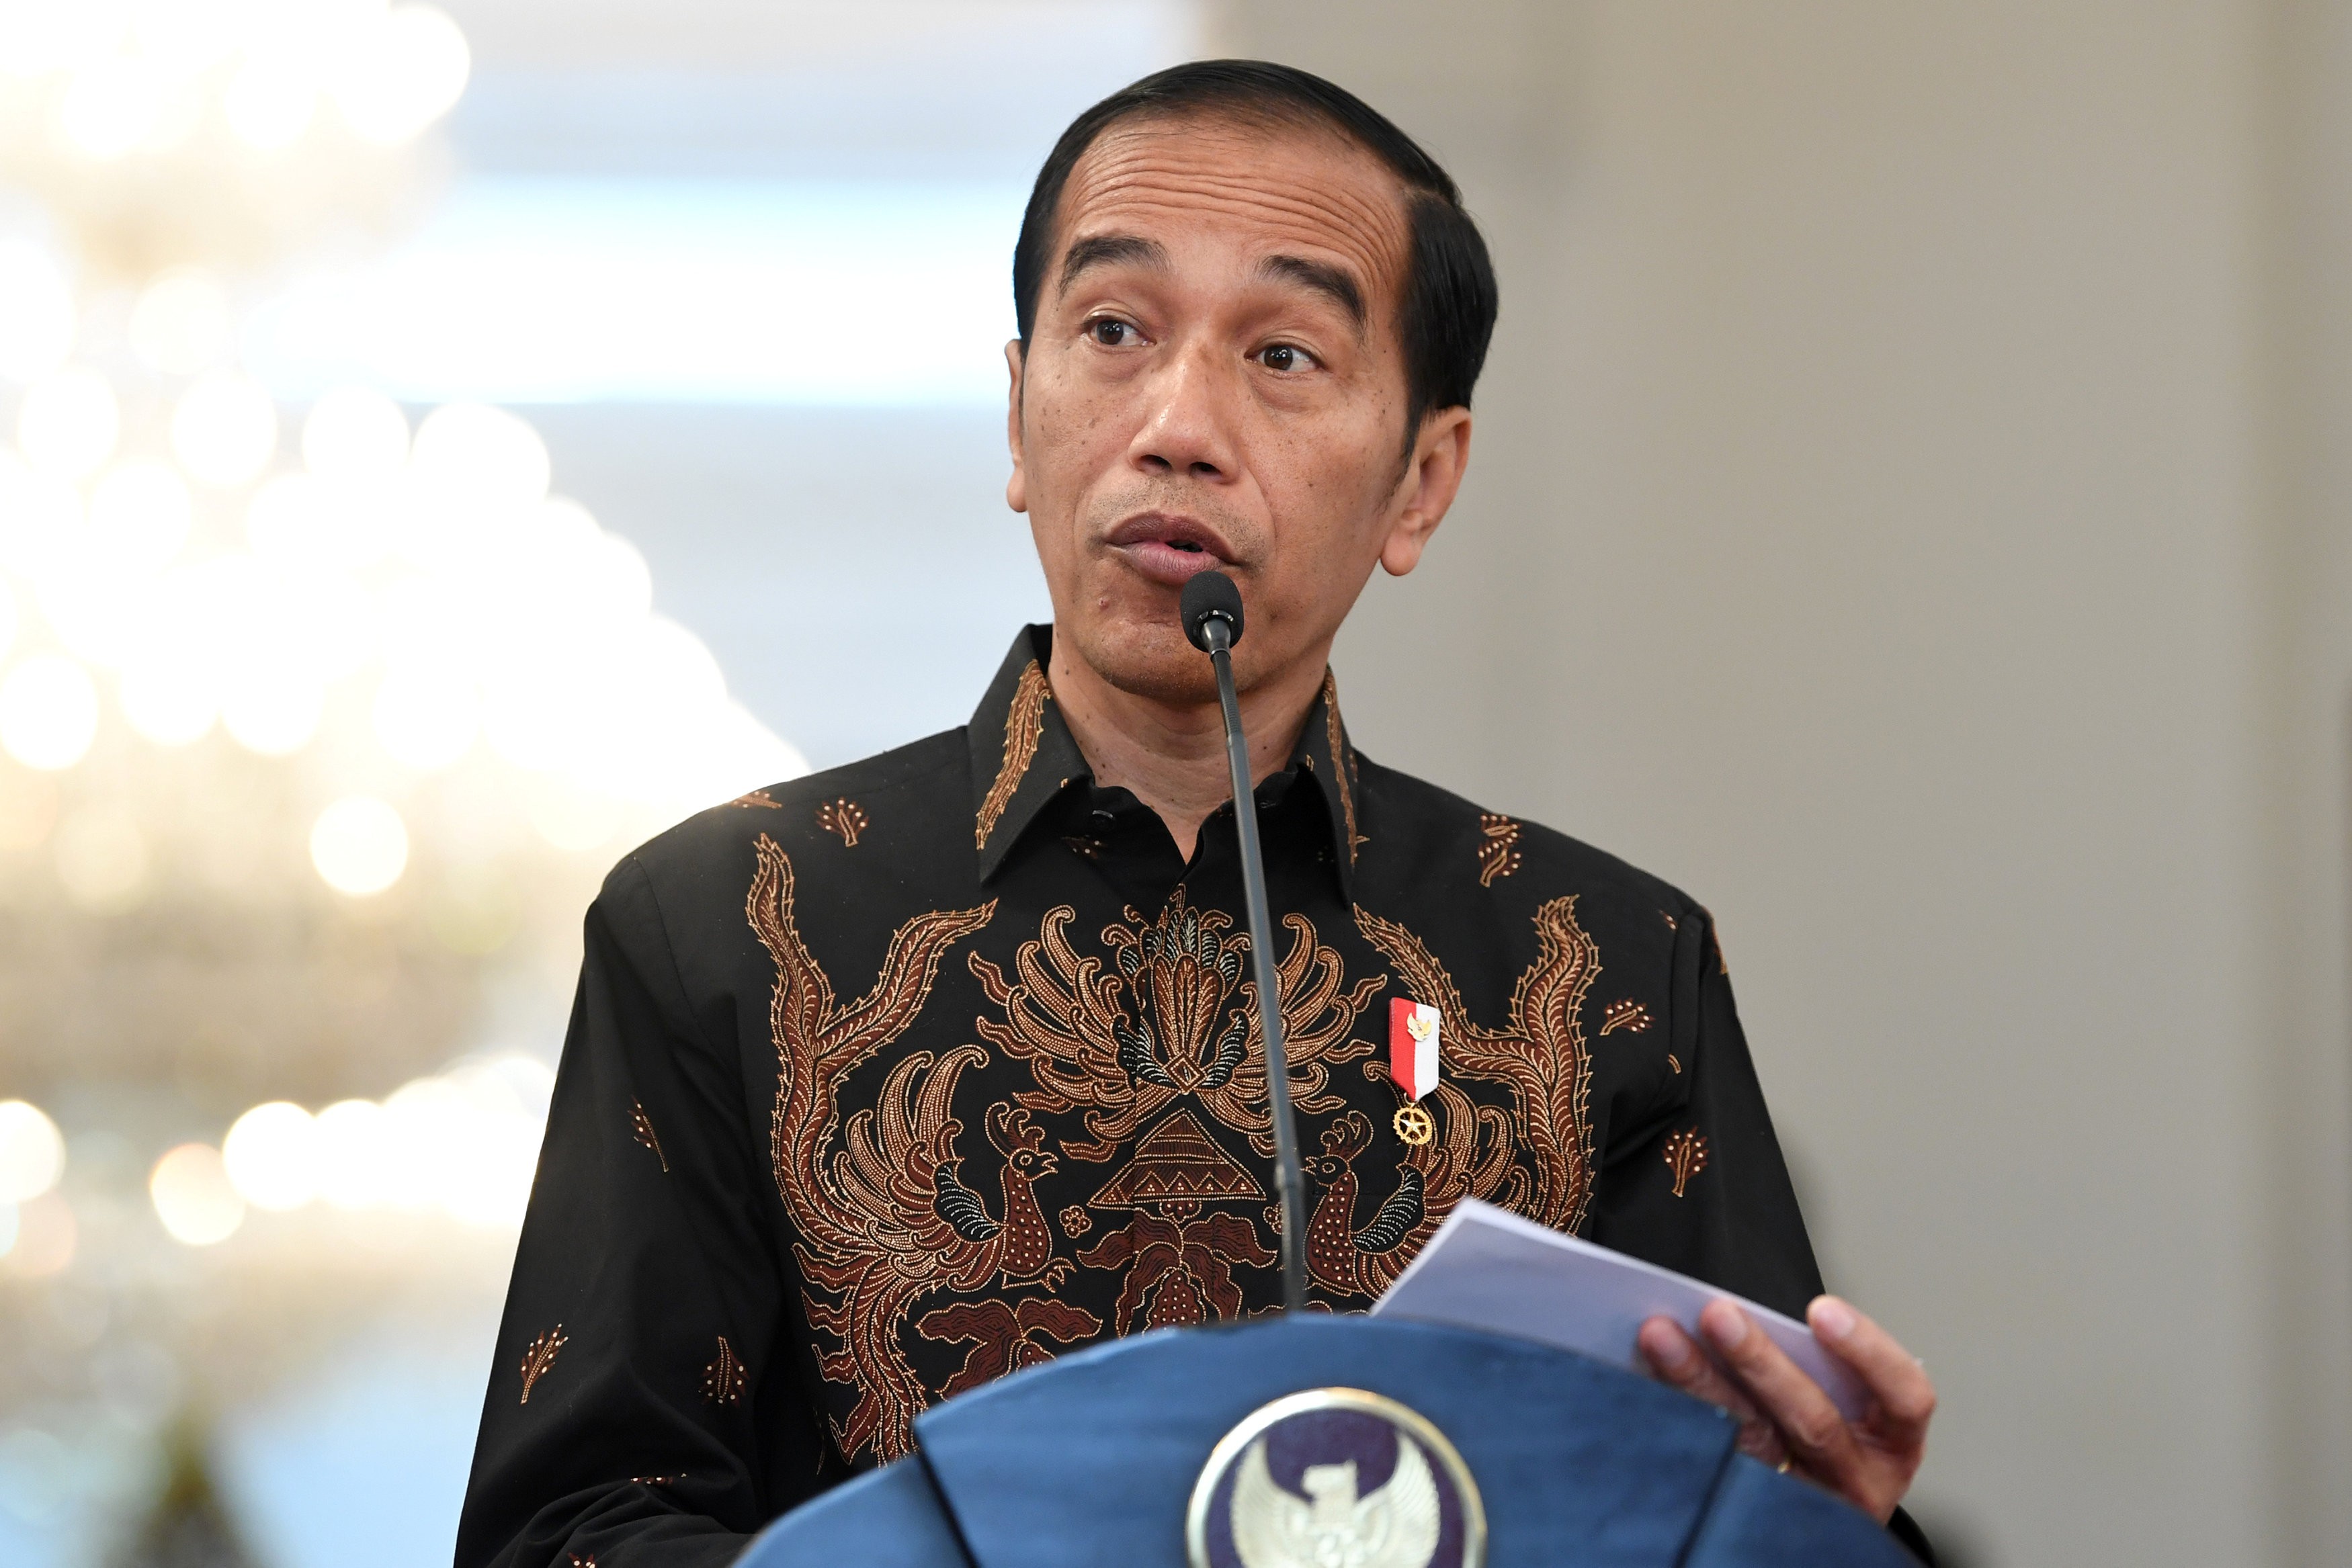 Vulgar nickname for Joko Widodo raises eyebrows in Indonesia